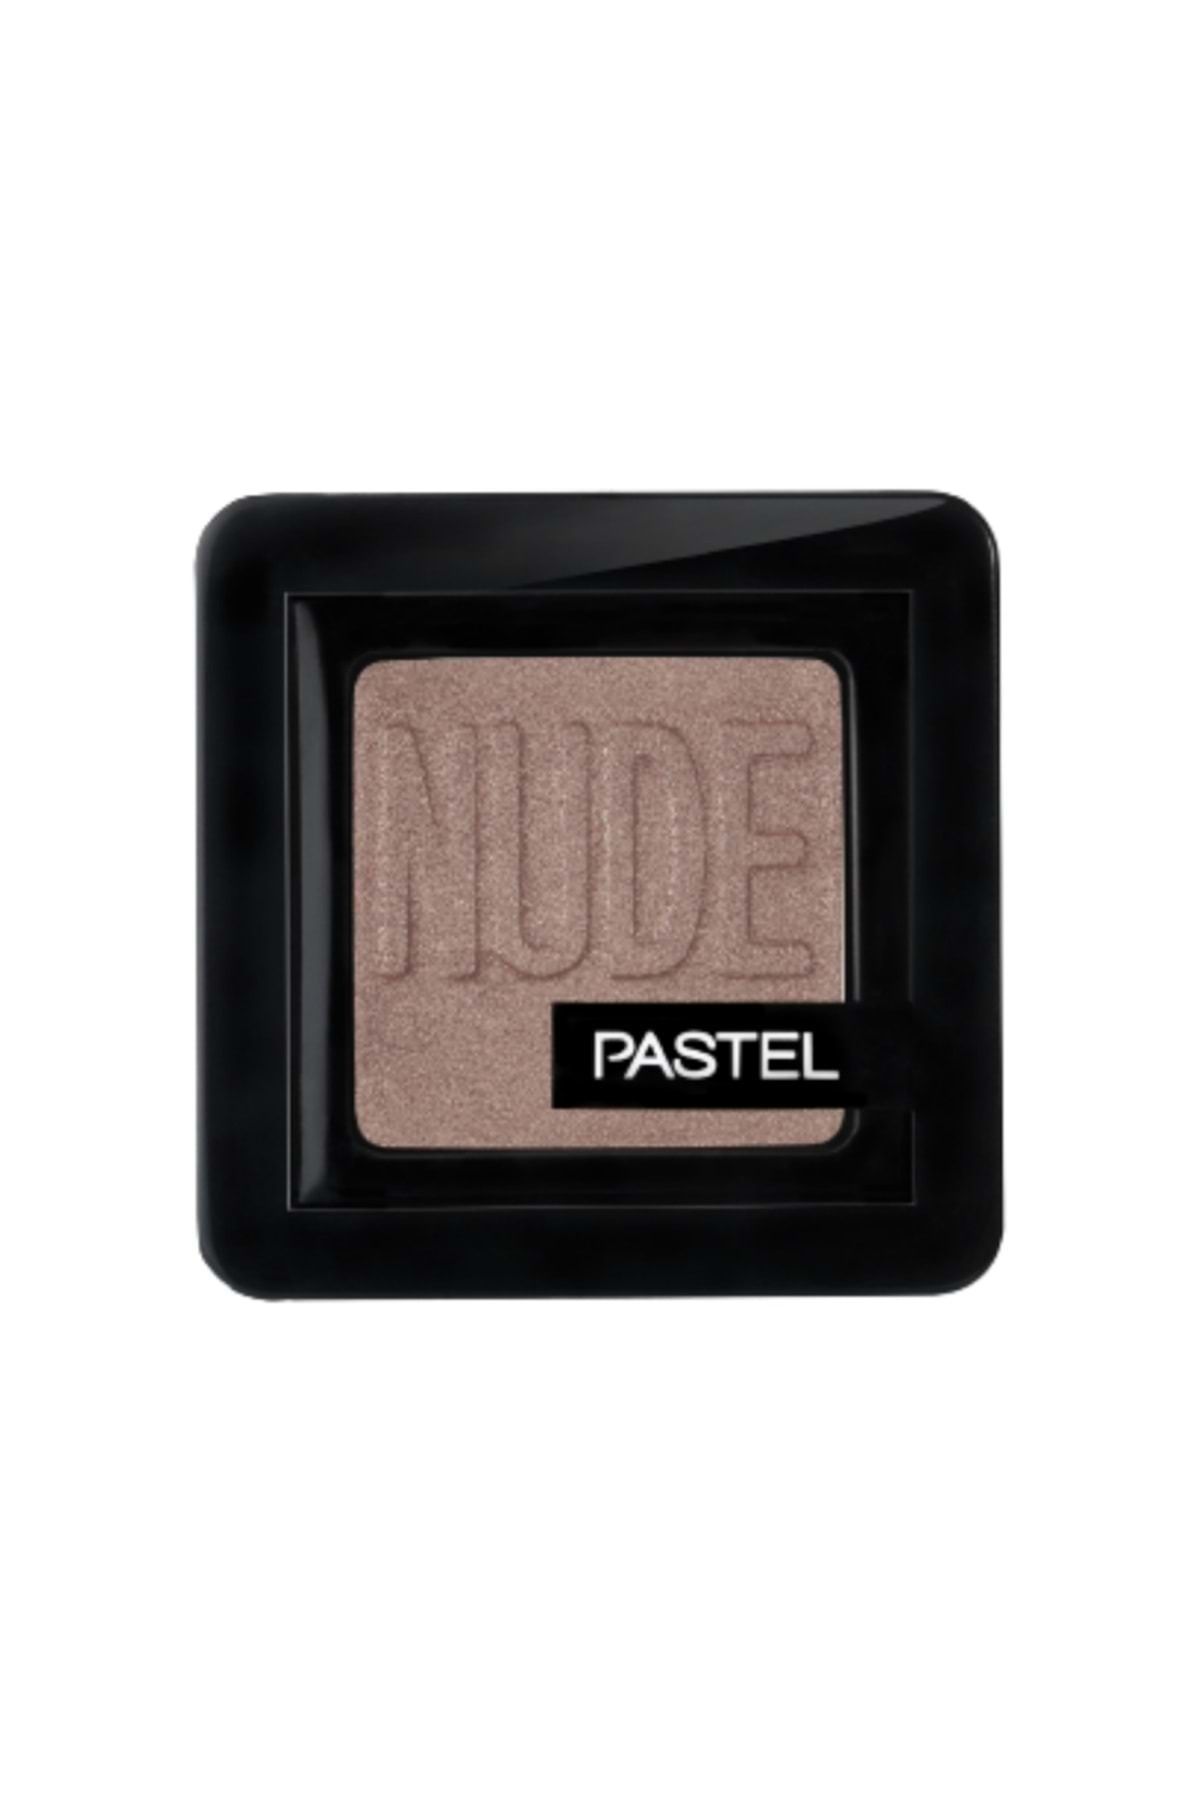 Pastel Nude Single Eyeshadow - Tekli Far 81 Bronze